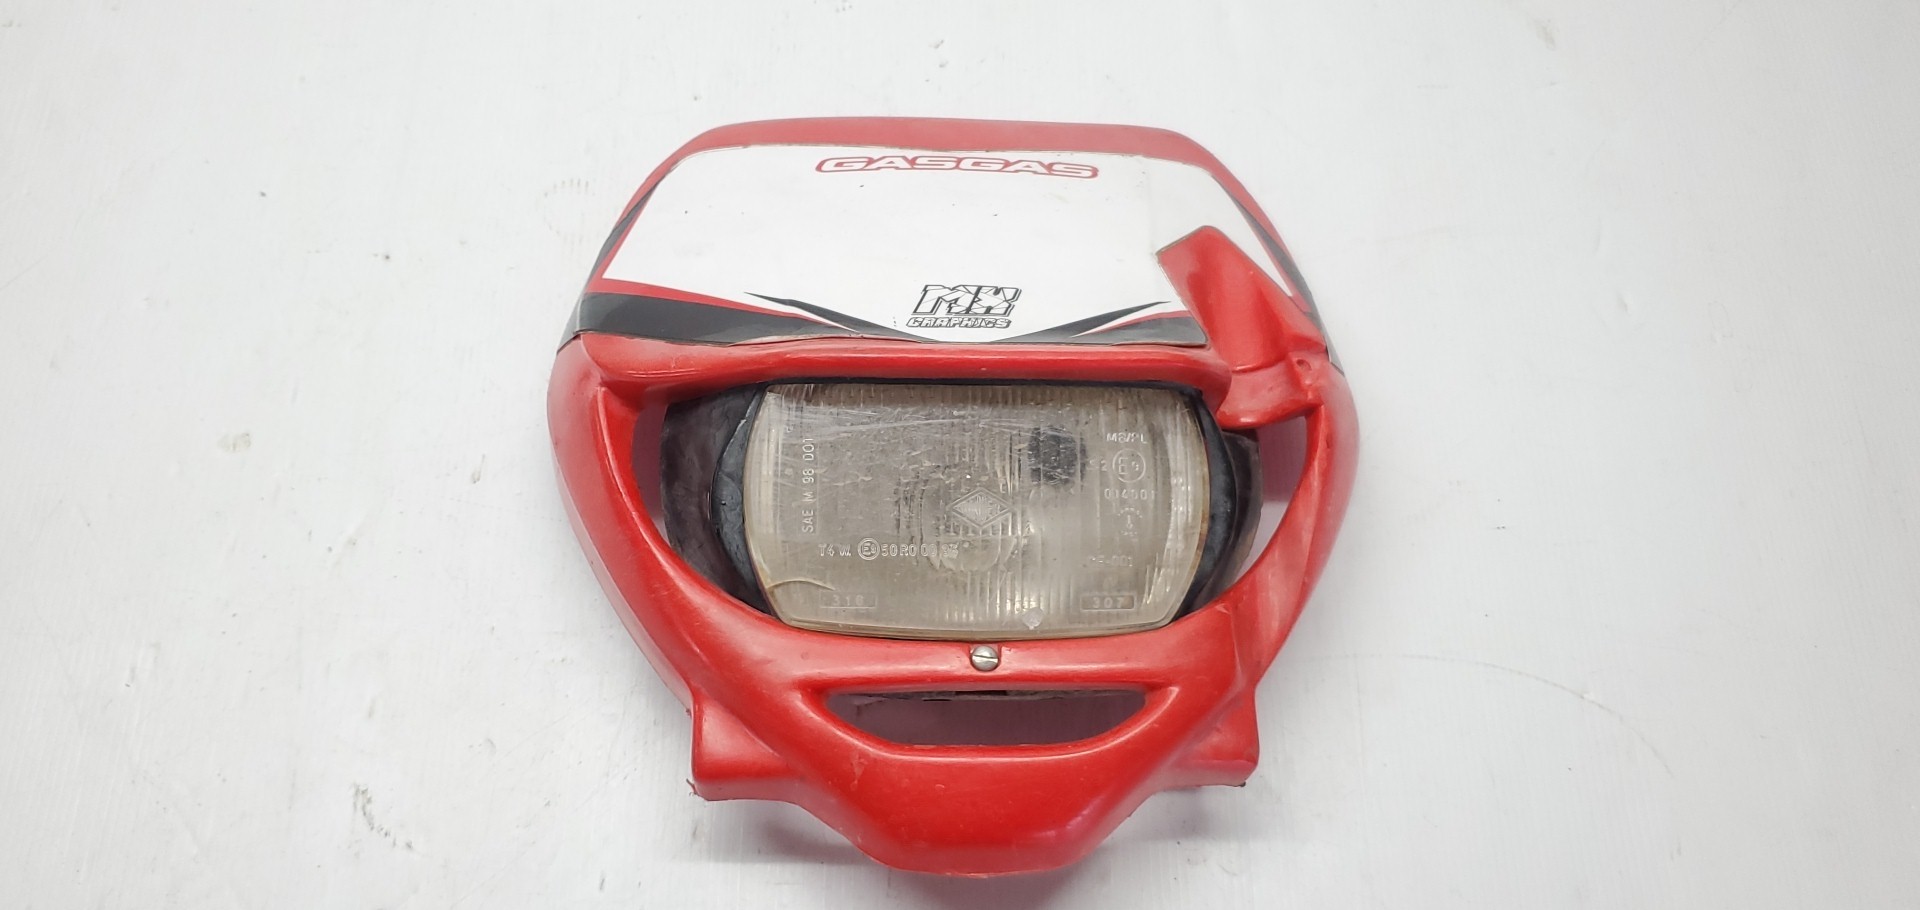 Headlight Mask Red Cowling Head Light Gasgas Gas Gas EC250 2003 EC 250 #787